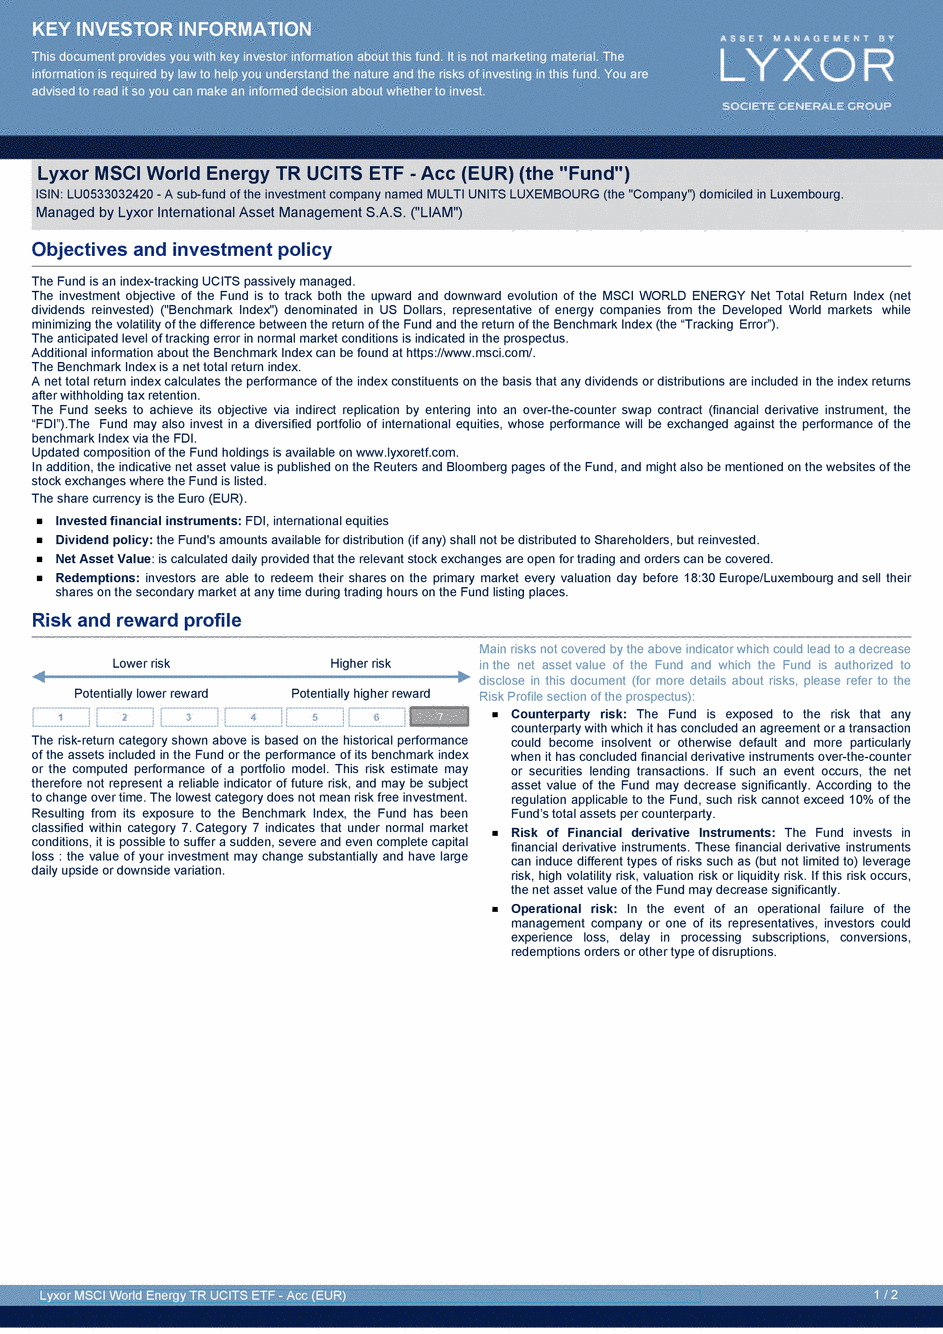 DICI Lyxor MSCI World Energy TR UCITS ETF - Acc (EUR) - 26/10/2020 - Anglais